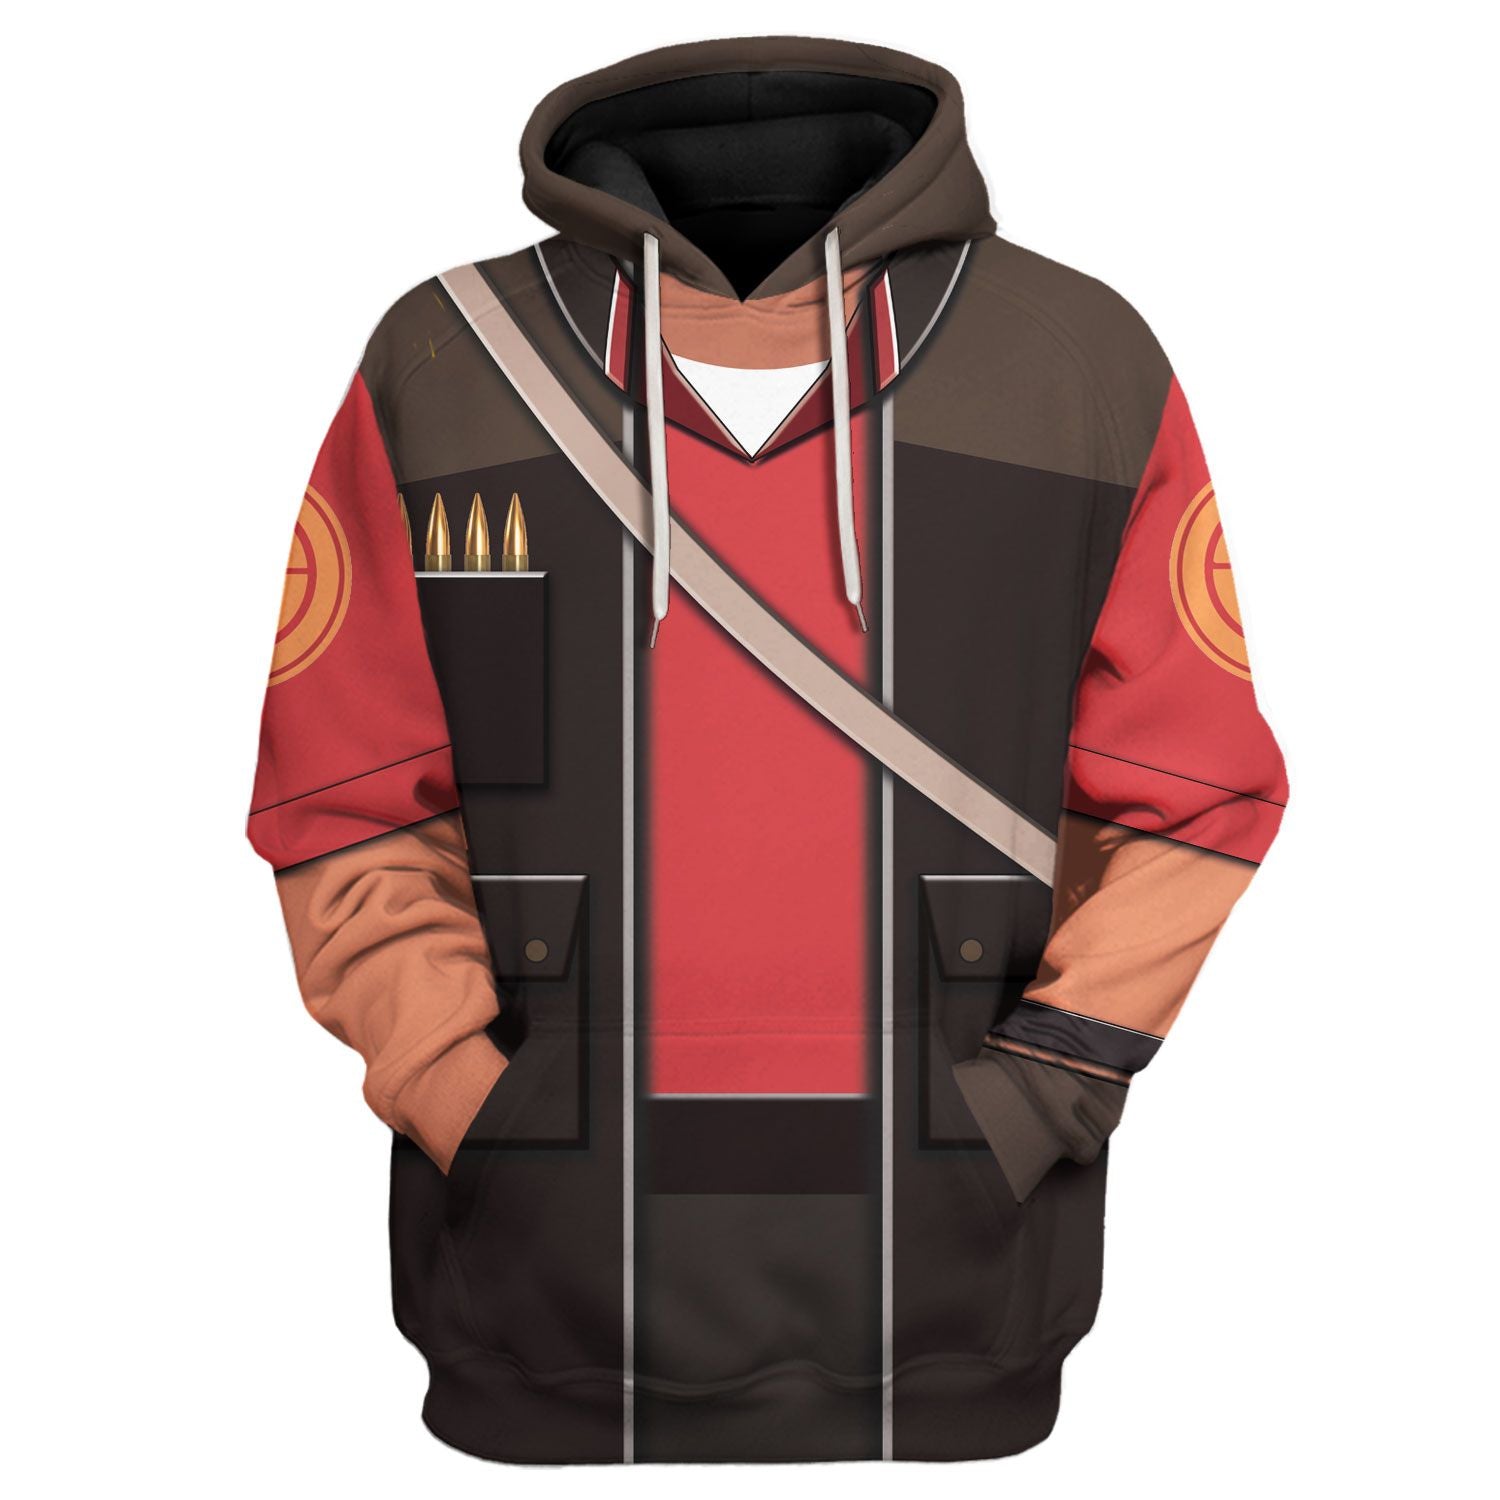 Sniper TF2 hoodie